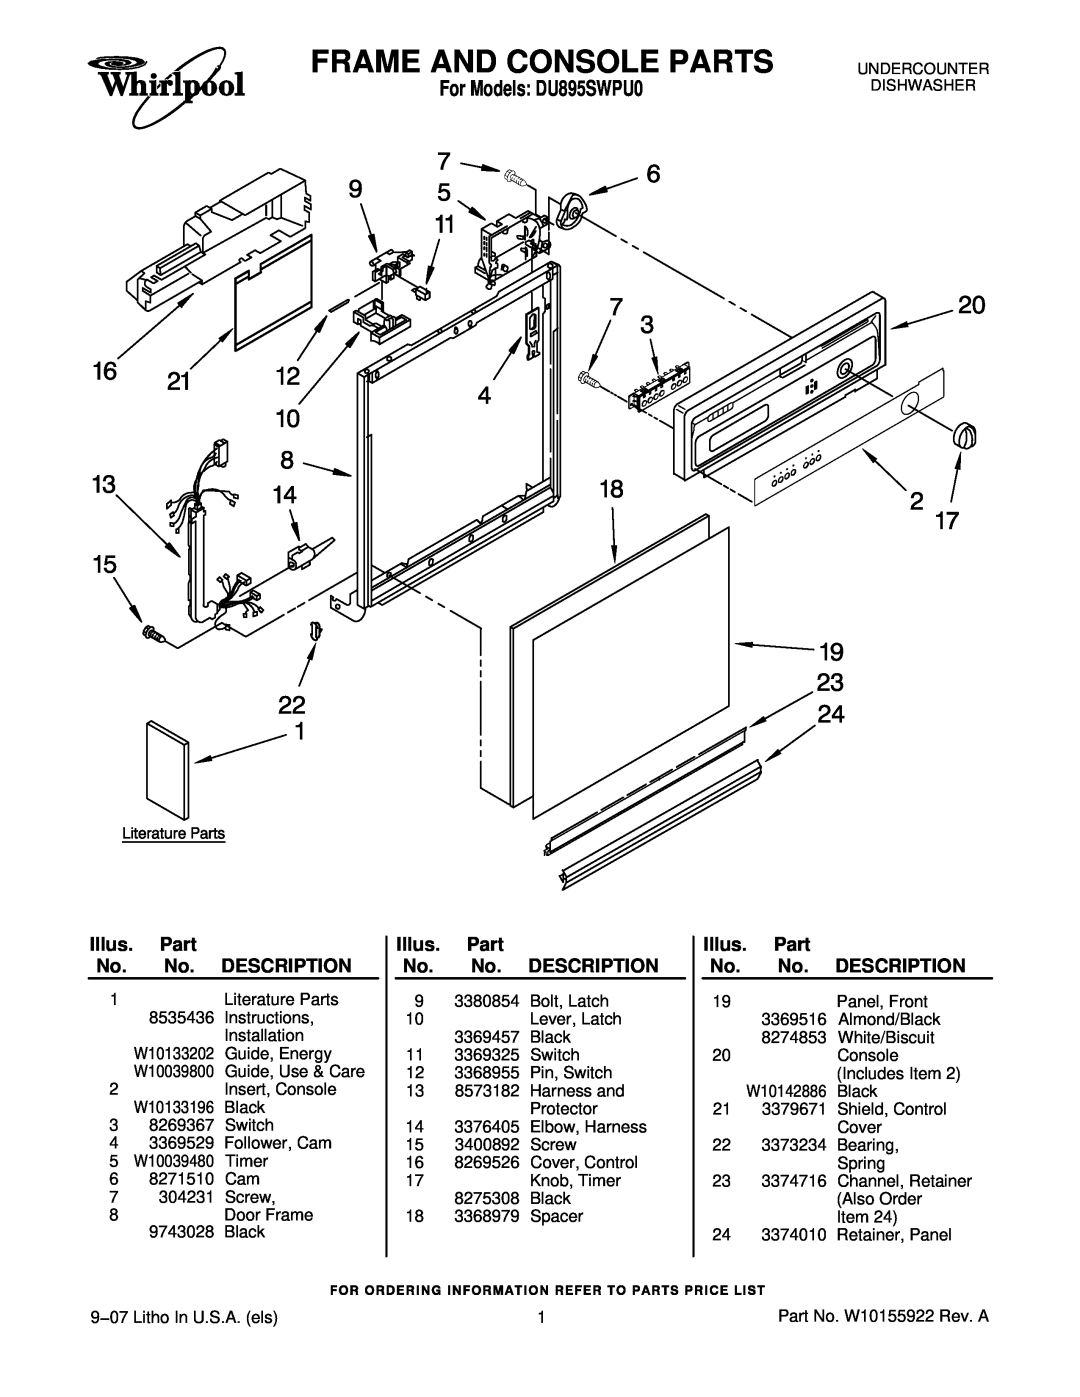 Whirlpool manual Frame And Console Parts, For Models DU895SWPU0, Illus. Part No. No. DESCRIPTION 